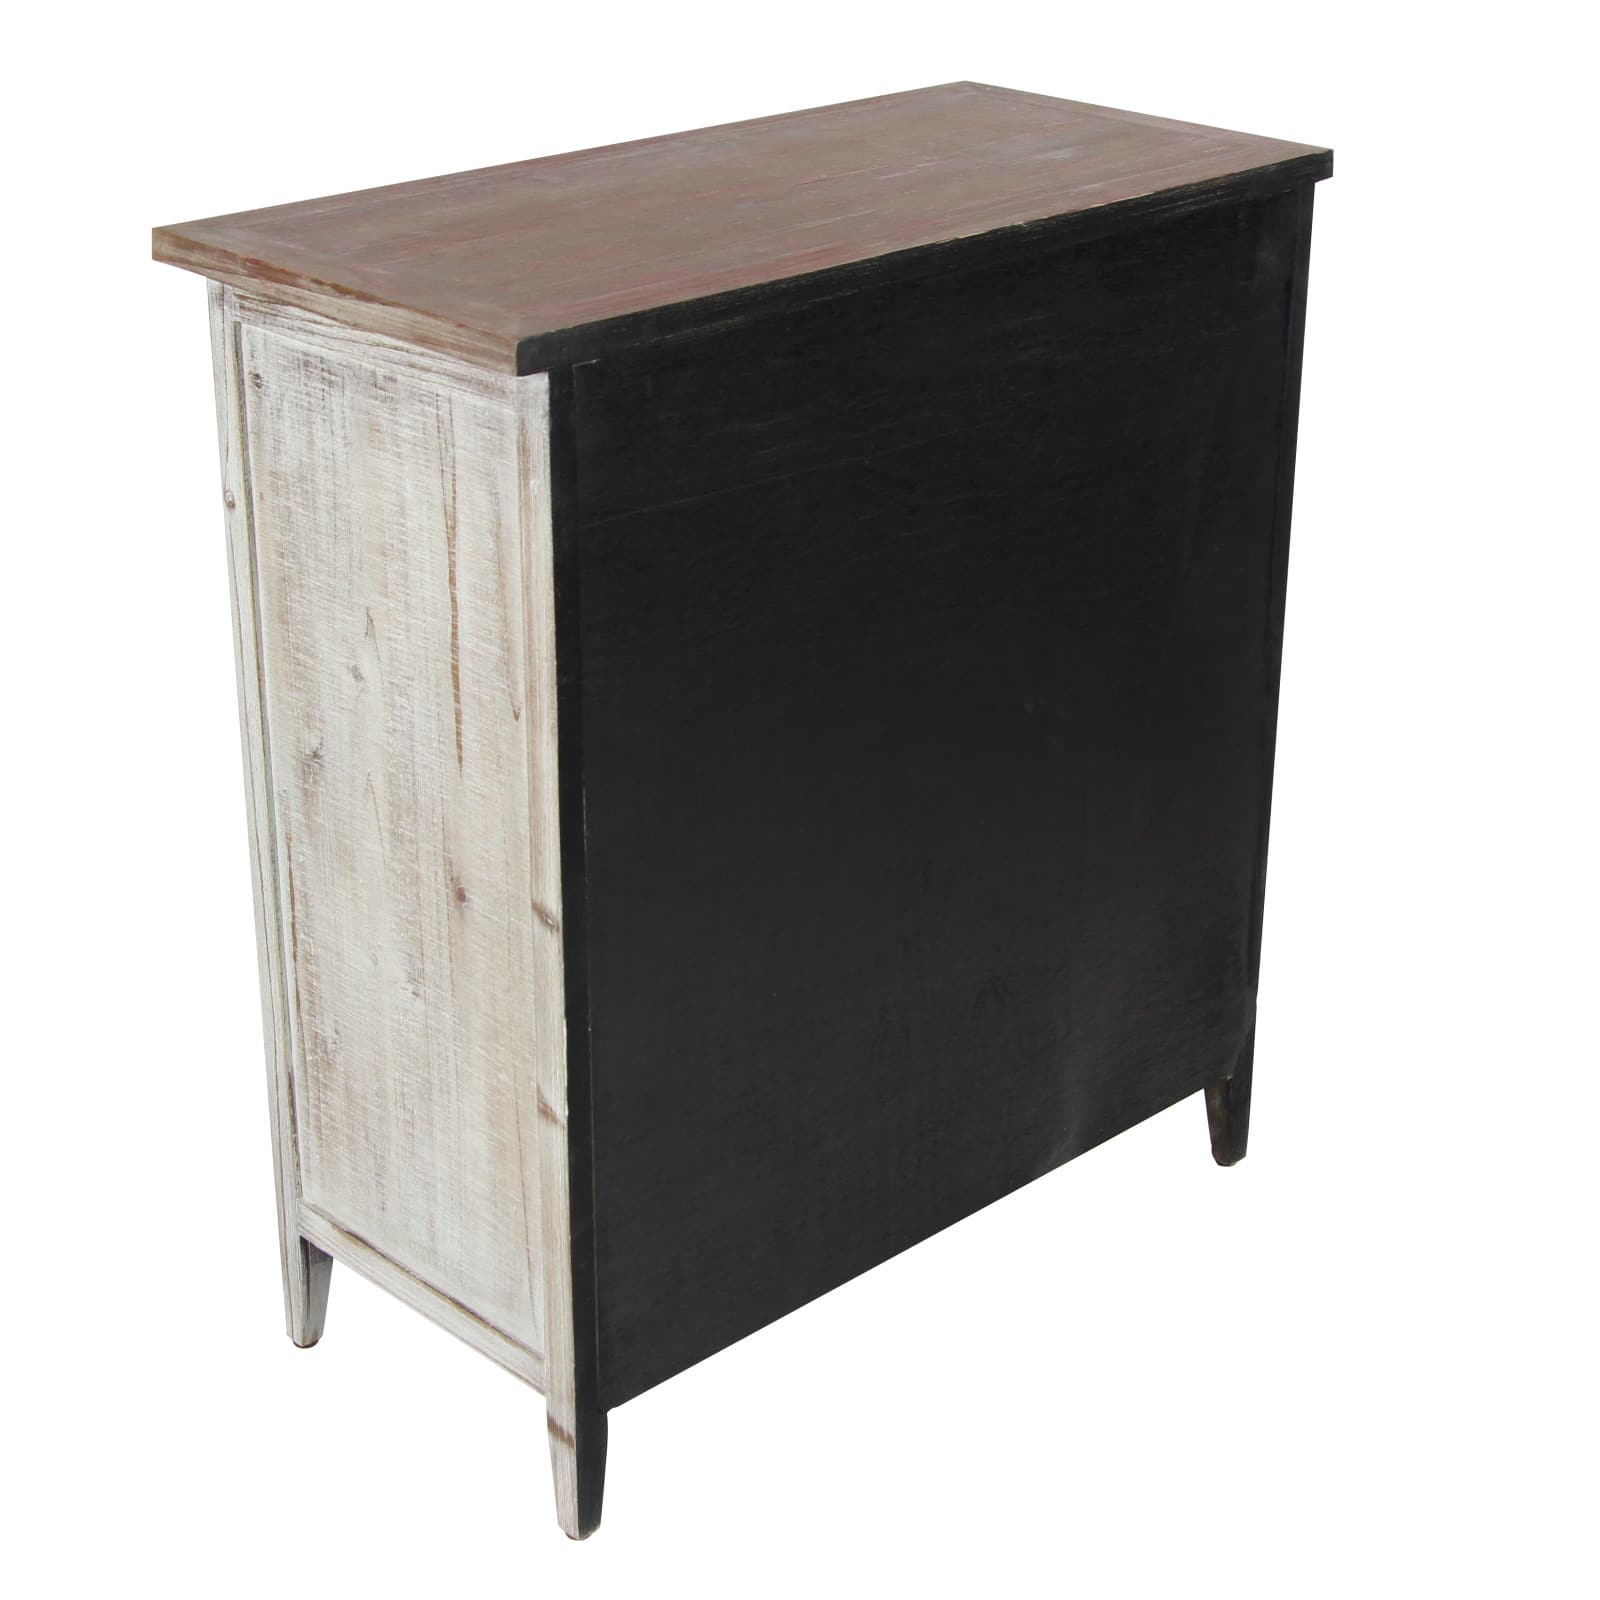 Rustic Rectangular Brown Wooden Lattice Cabinet, 31.19&#x201D; x 28.50&#x201D; x 13.63&#x201D;